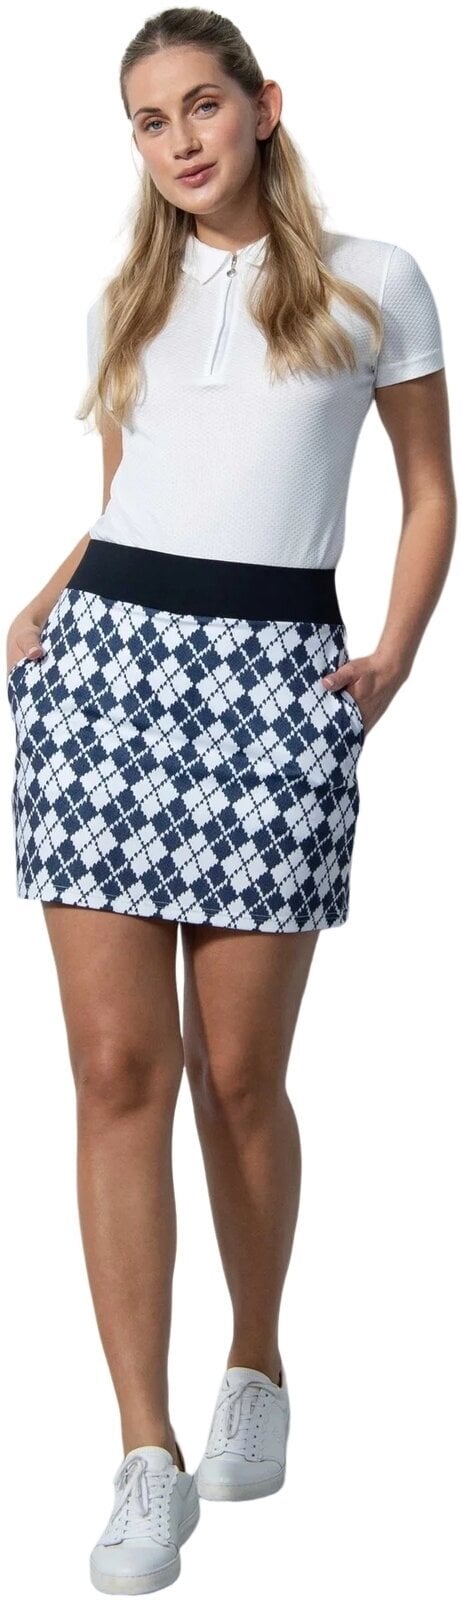 Skirt / Dress Daily Sports Abruzzo Skort 45 cm Argyle M